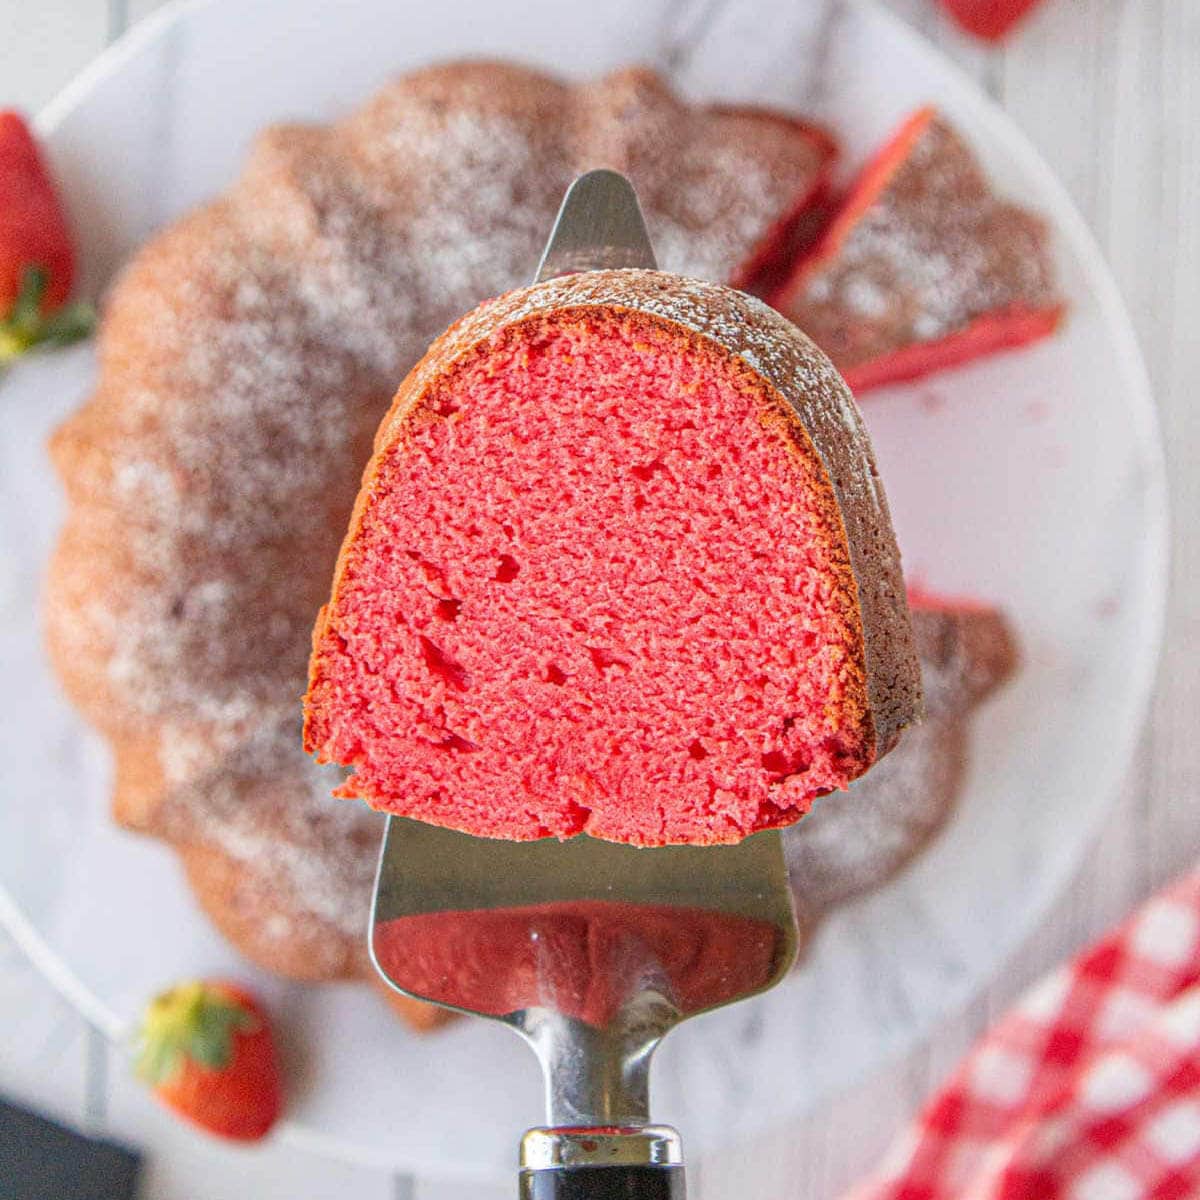 A slice of pink strawberry pound cake spatula.